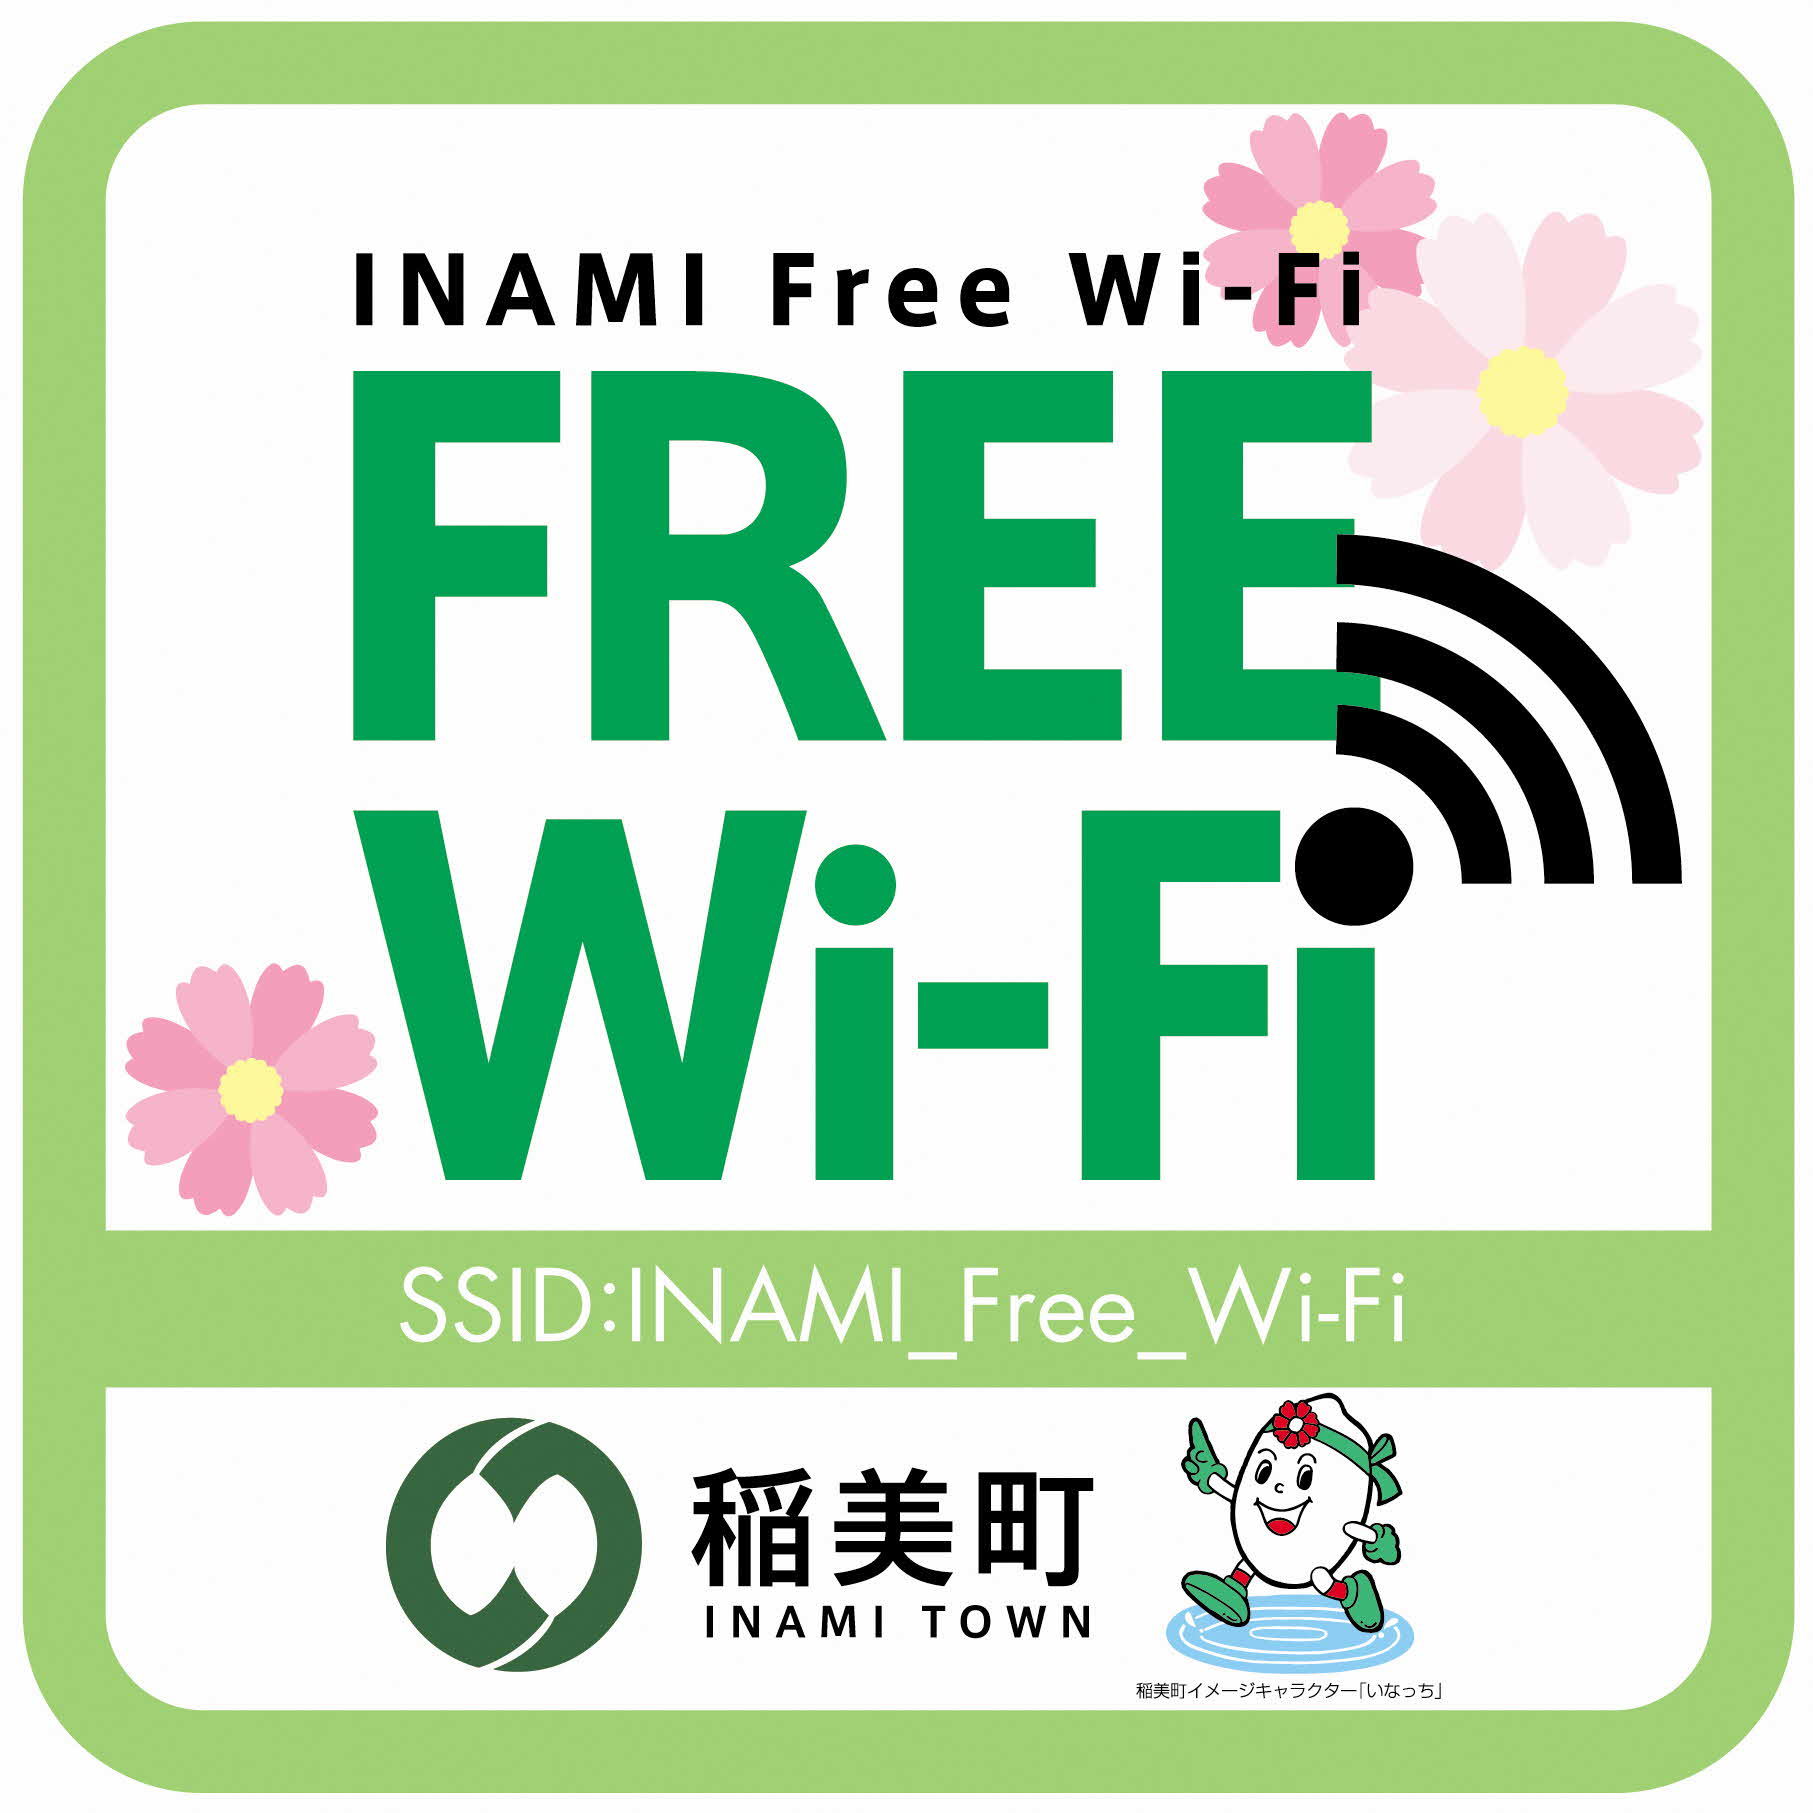 「INAMI Free Wi-Fi」対象施設を示すステッカー